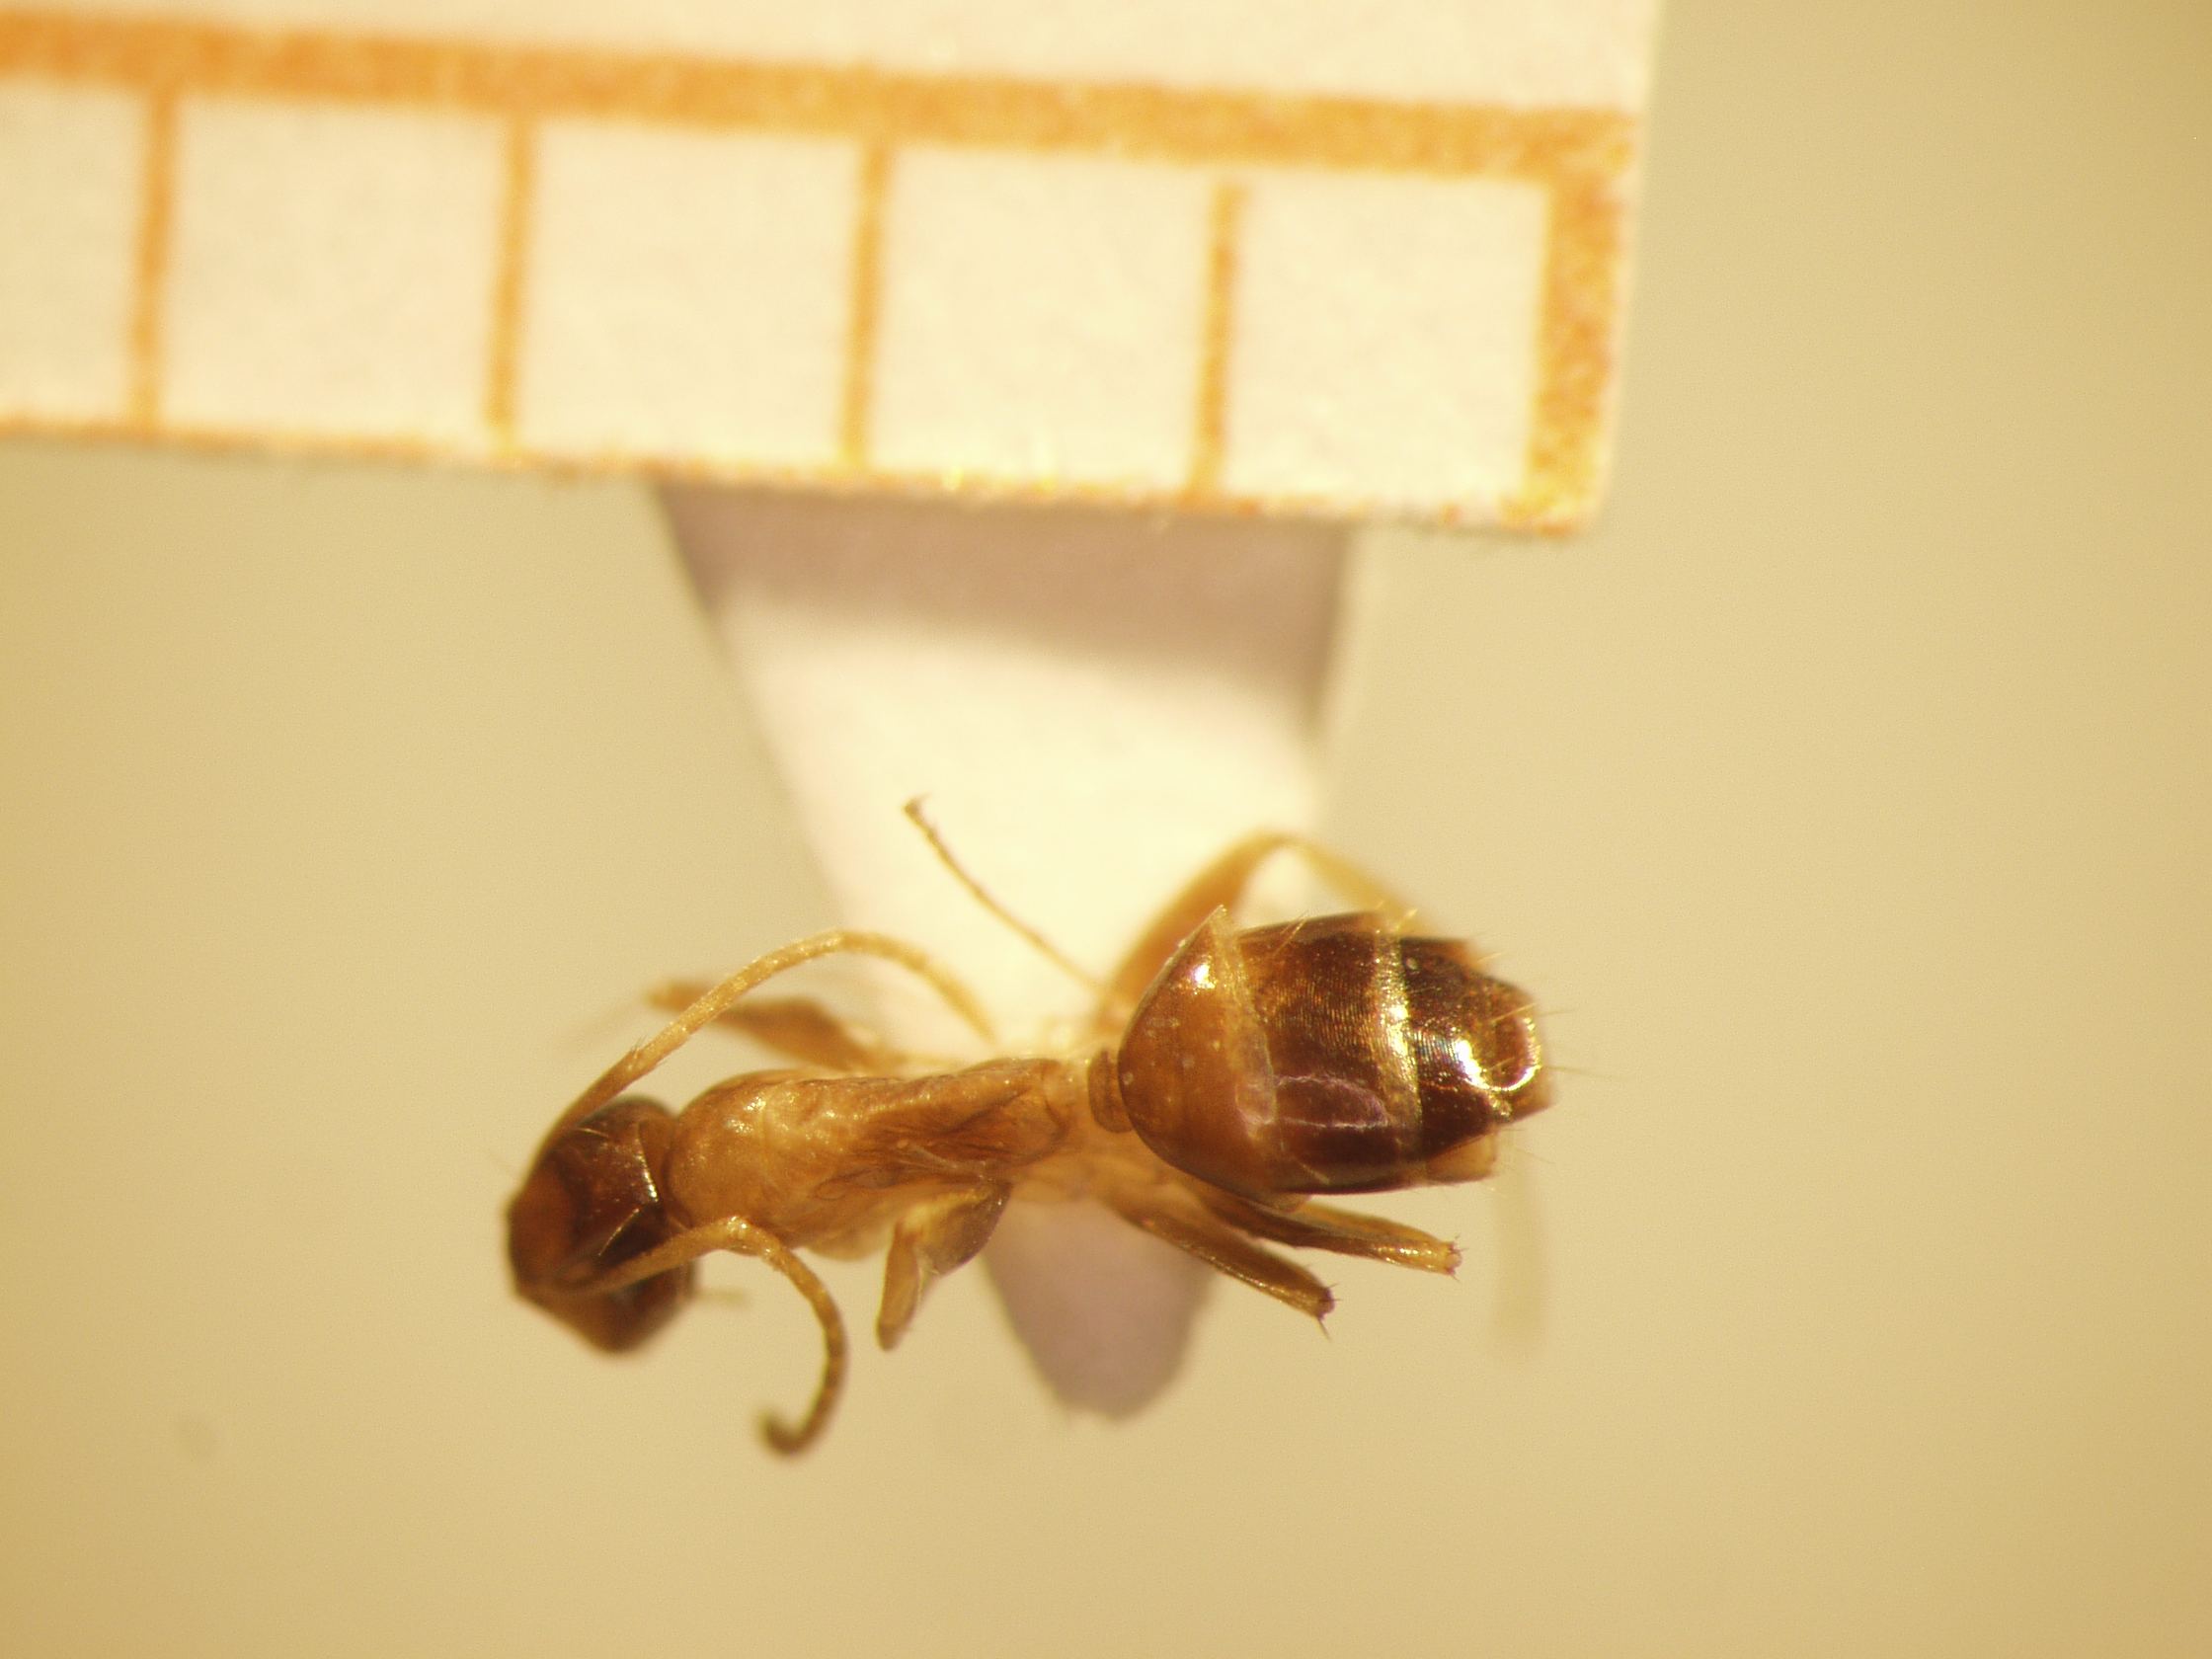 Camponotus 52 dorsal